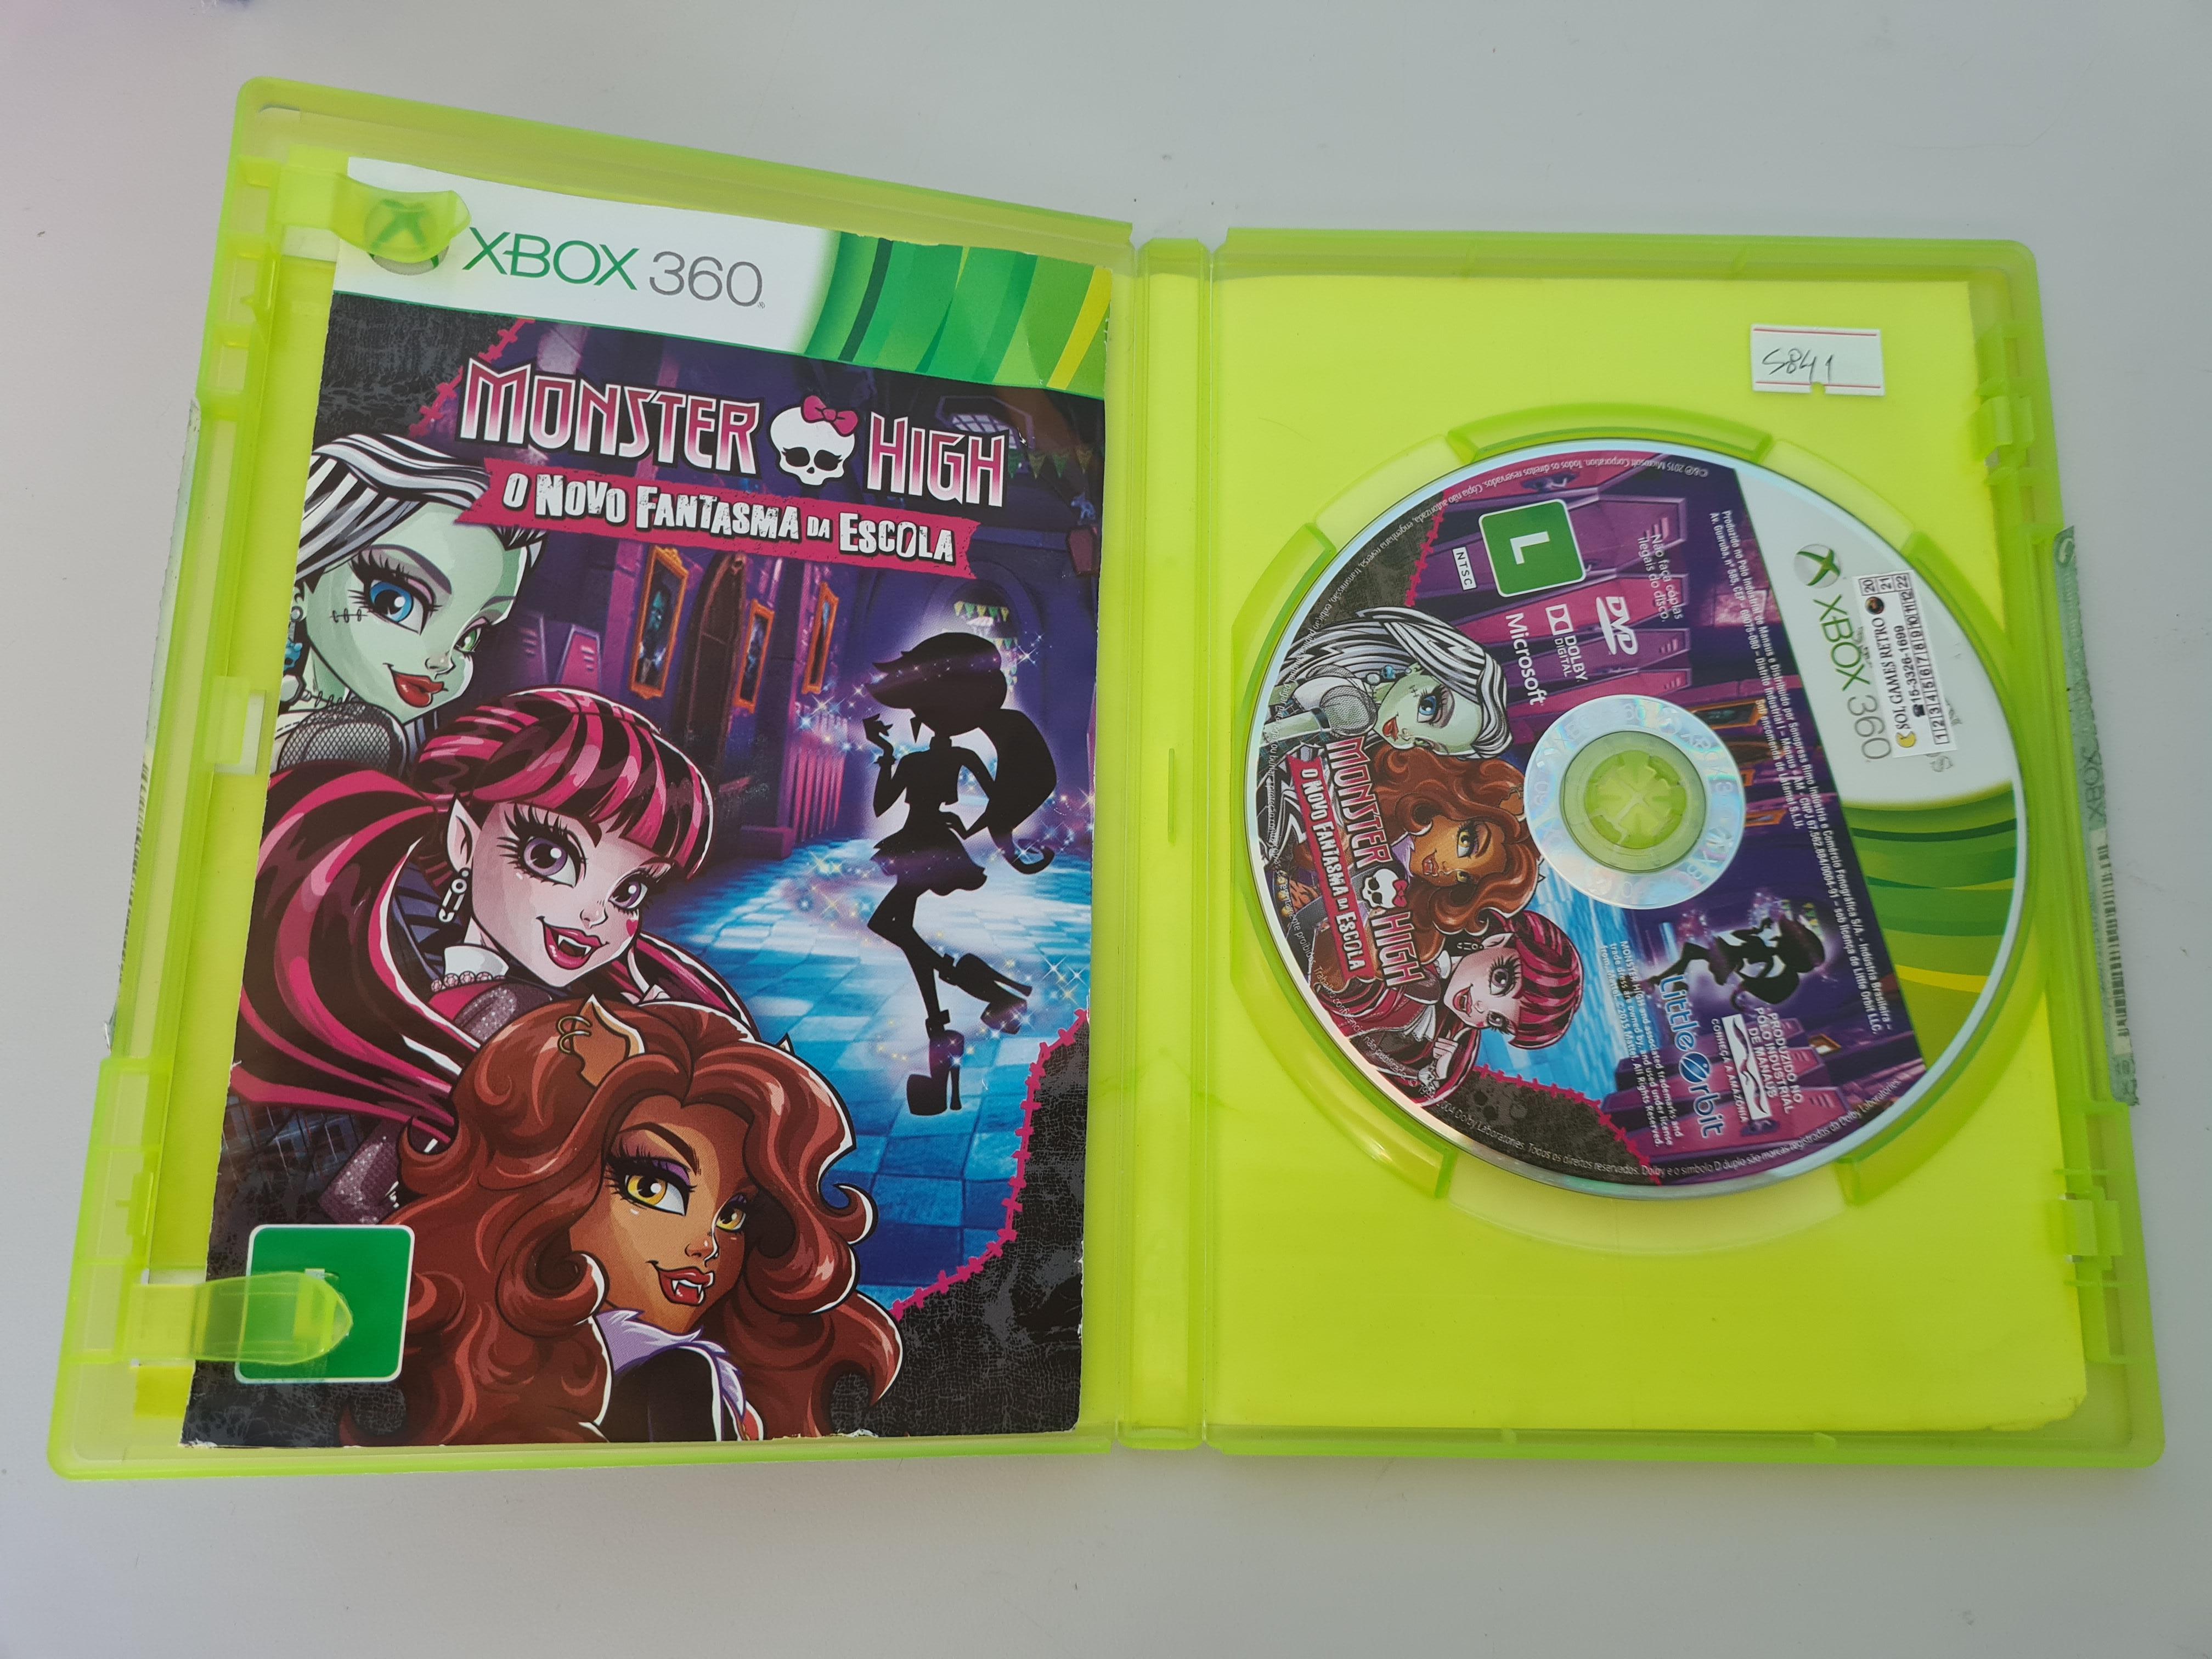 Monster High O Novo Fantasma Da Escola - Xbox 360 (Novo) - Arena Games -  Loja Geek